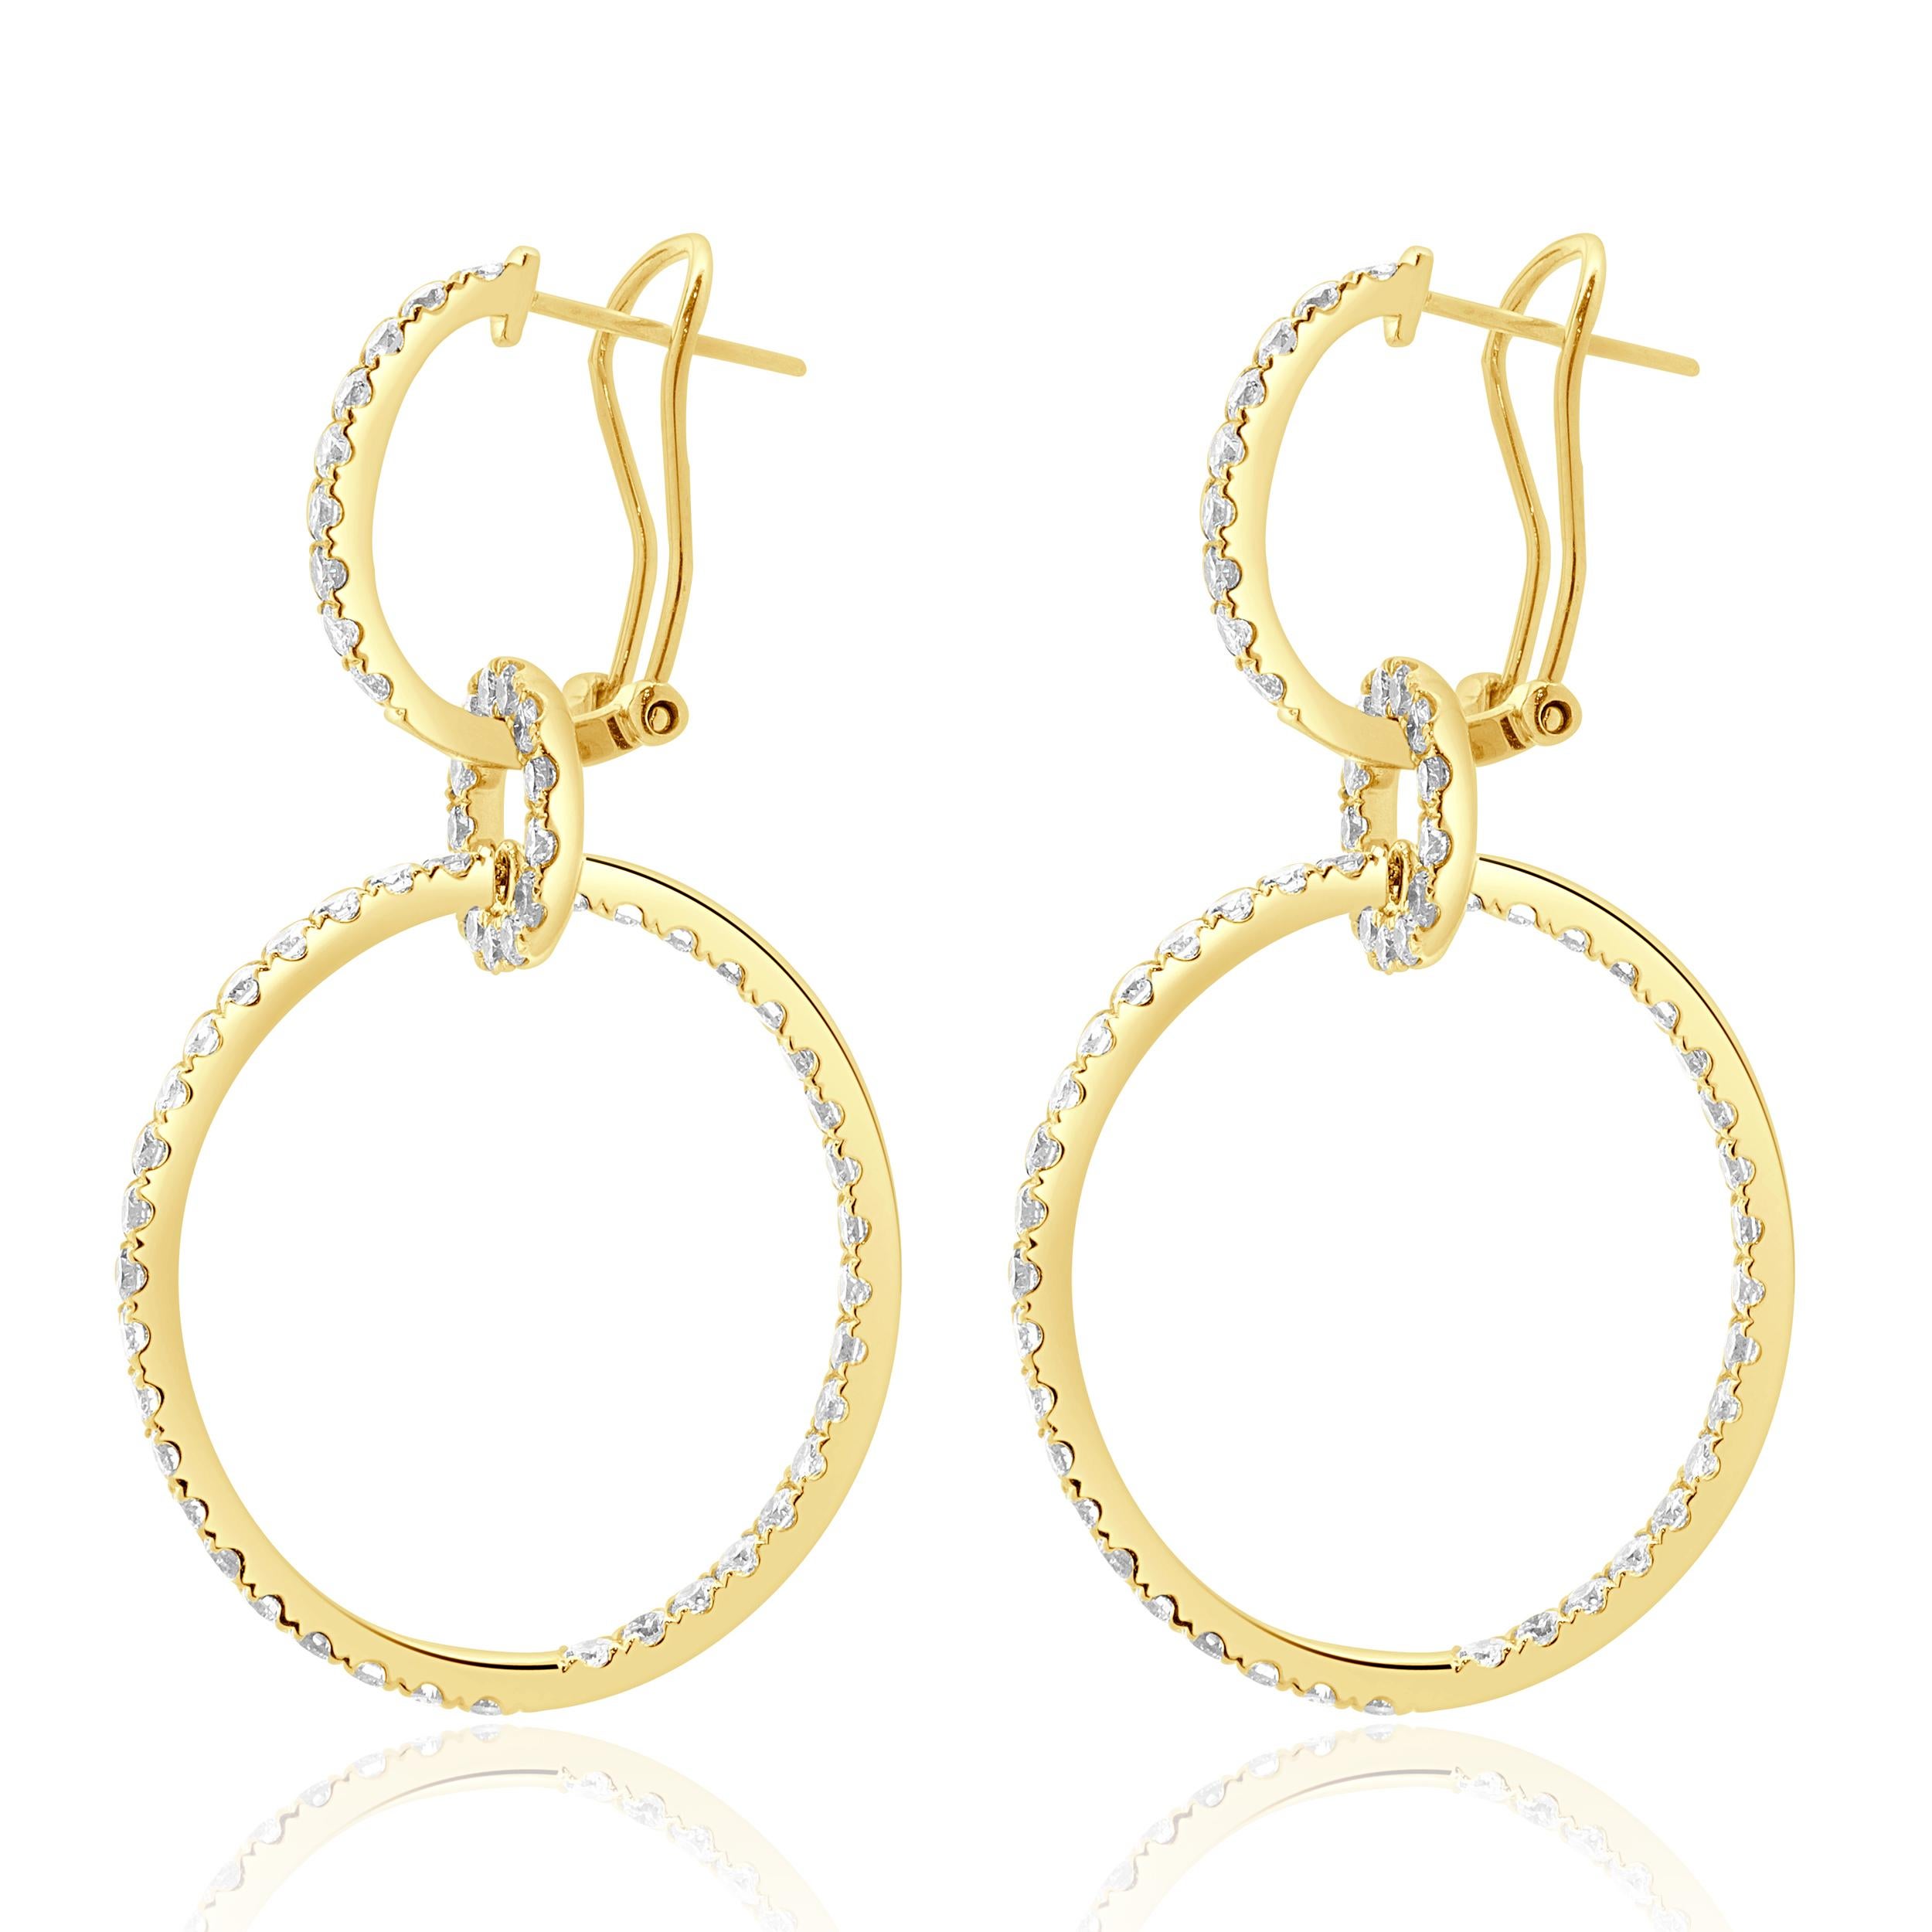 Designer: custom design
Material: 18K yellow gold
Diamonds: 120 round brilliant cut = 5.00cttw
Color: G
Clarity: VS1-2
Dimensions: earrings measure 54mm in length
Weight: 15.45 grams
